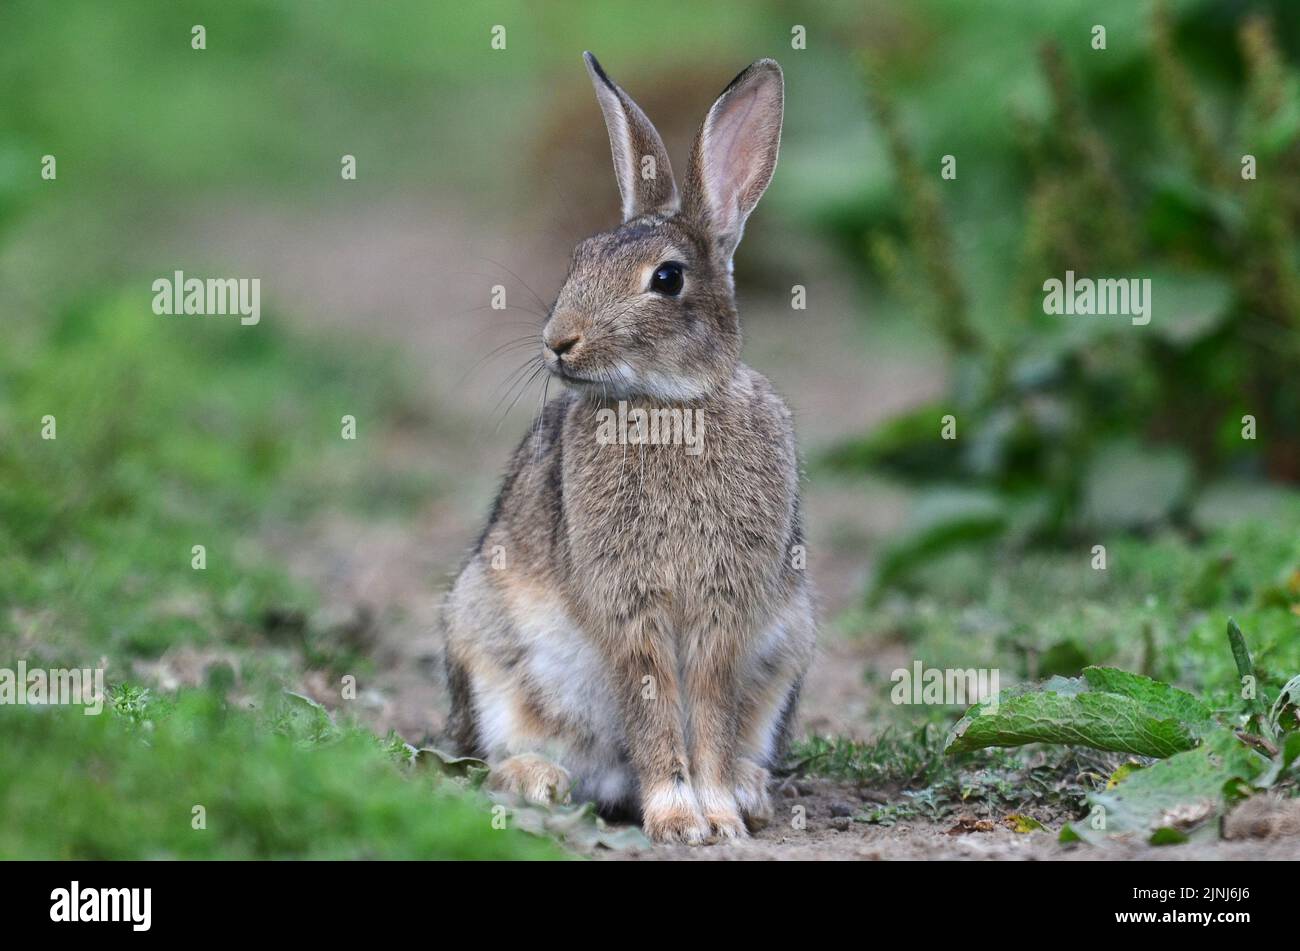 Young rabbit in alert posture Stock Photo